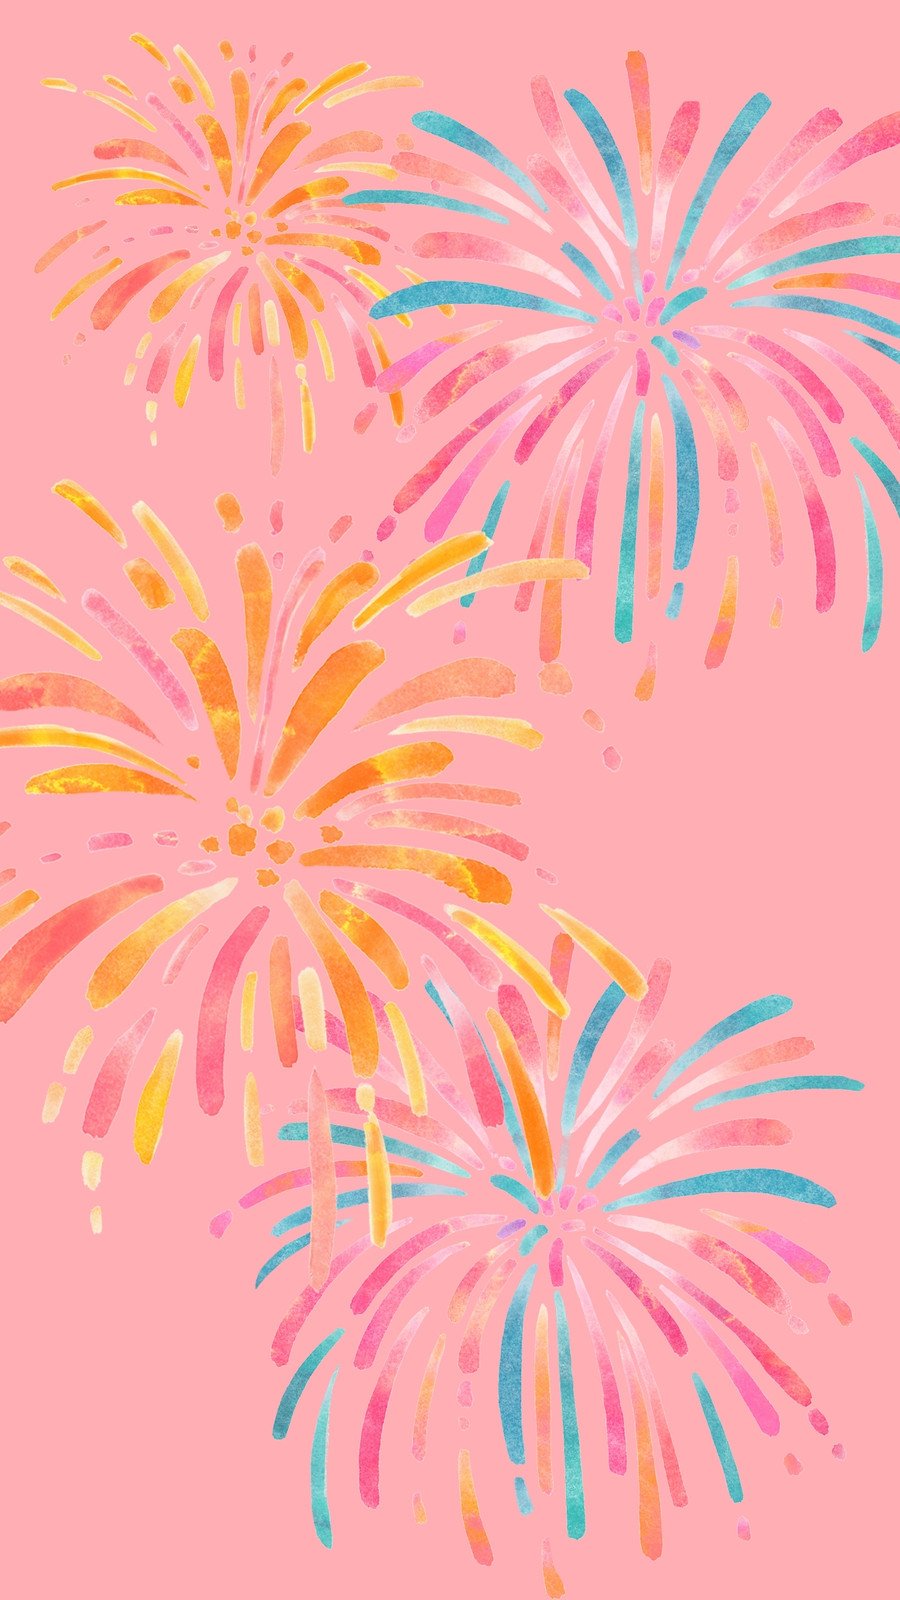 fireworks background